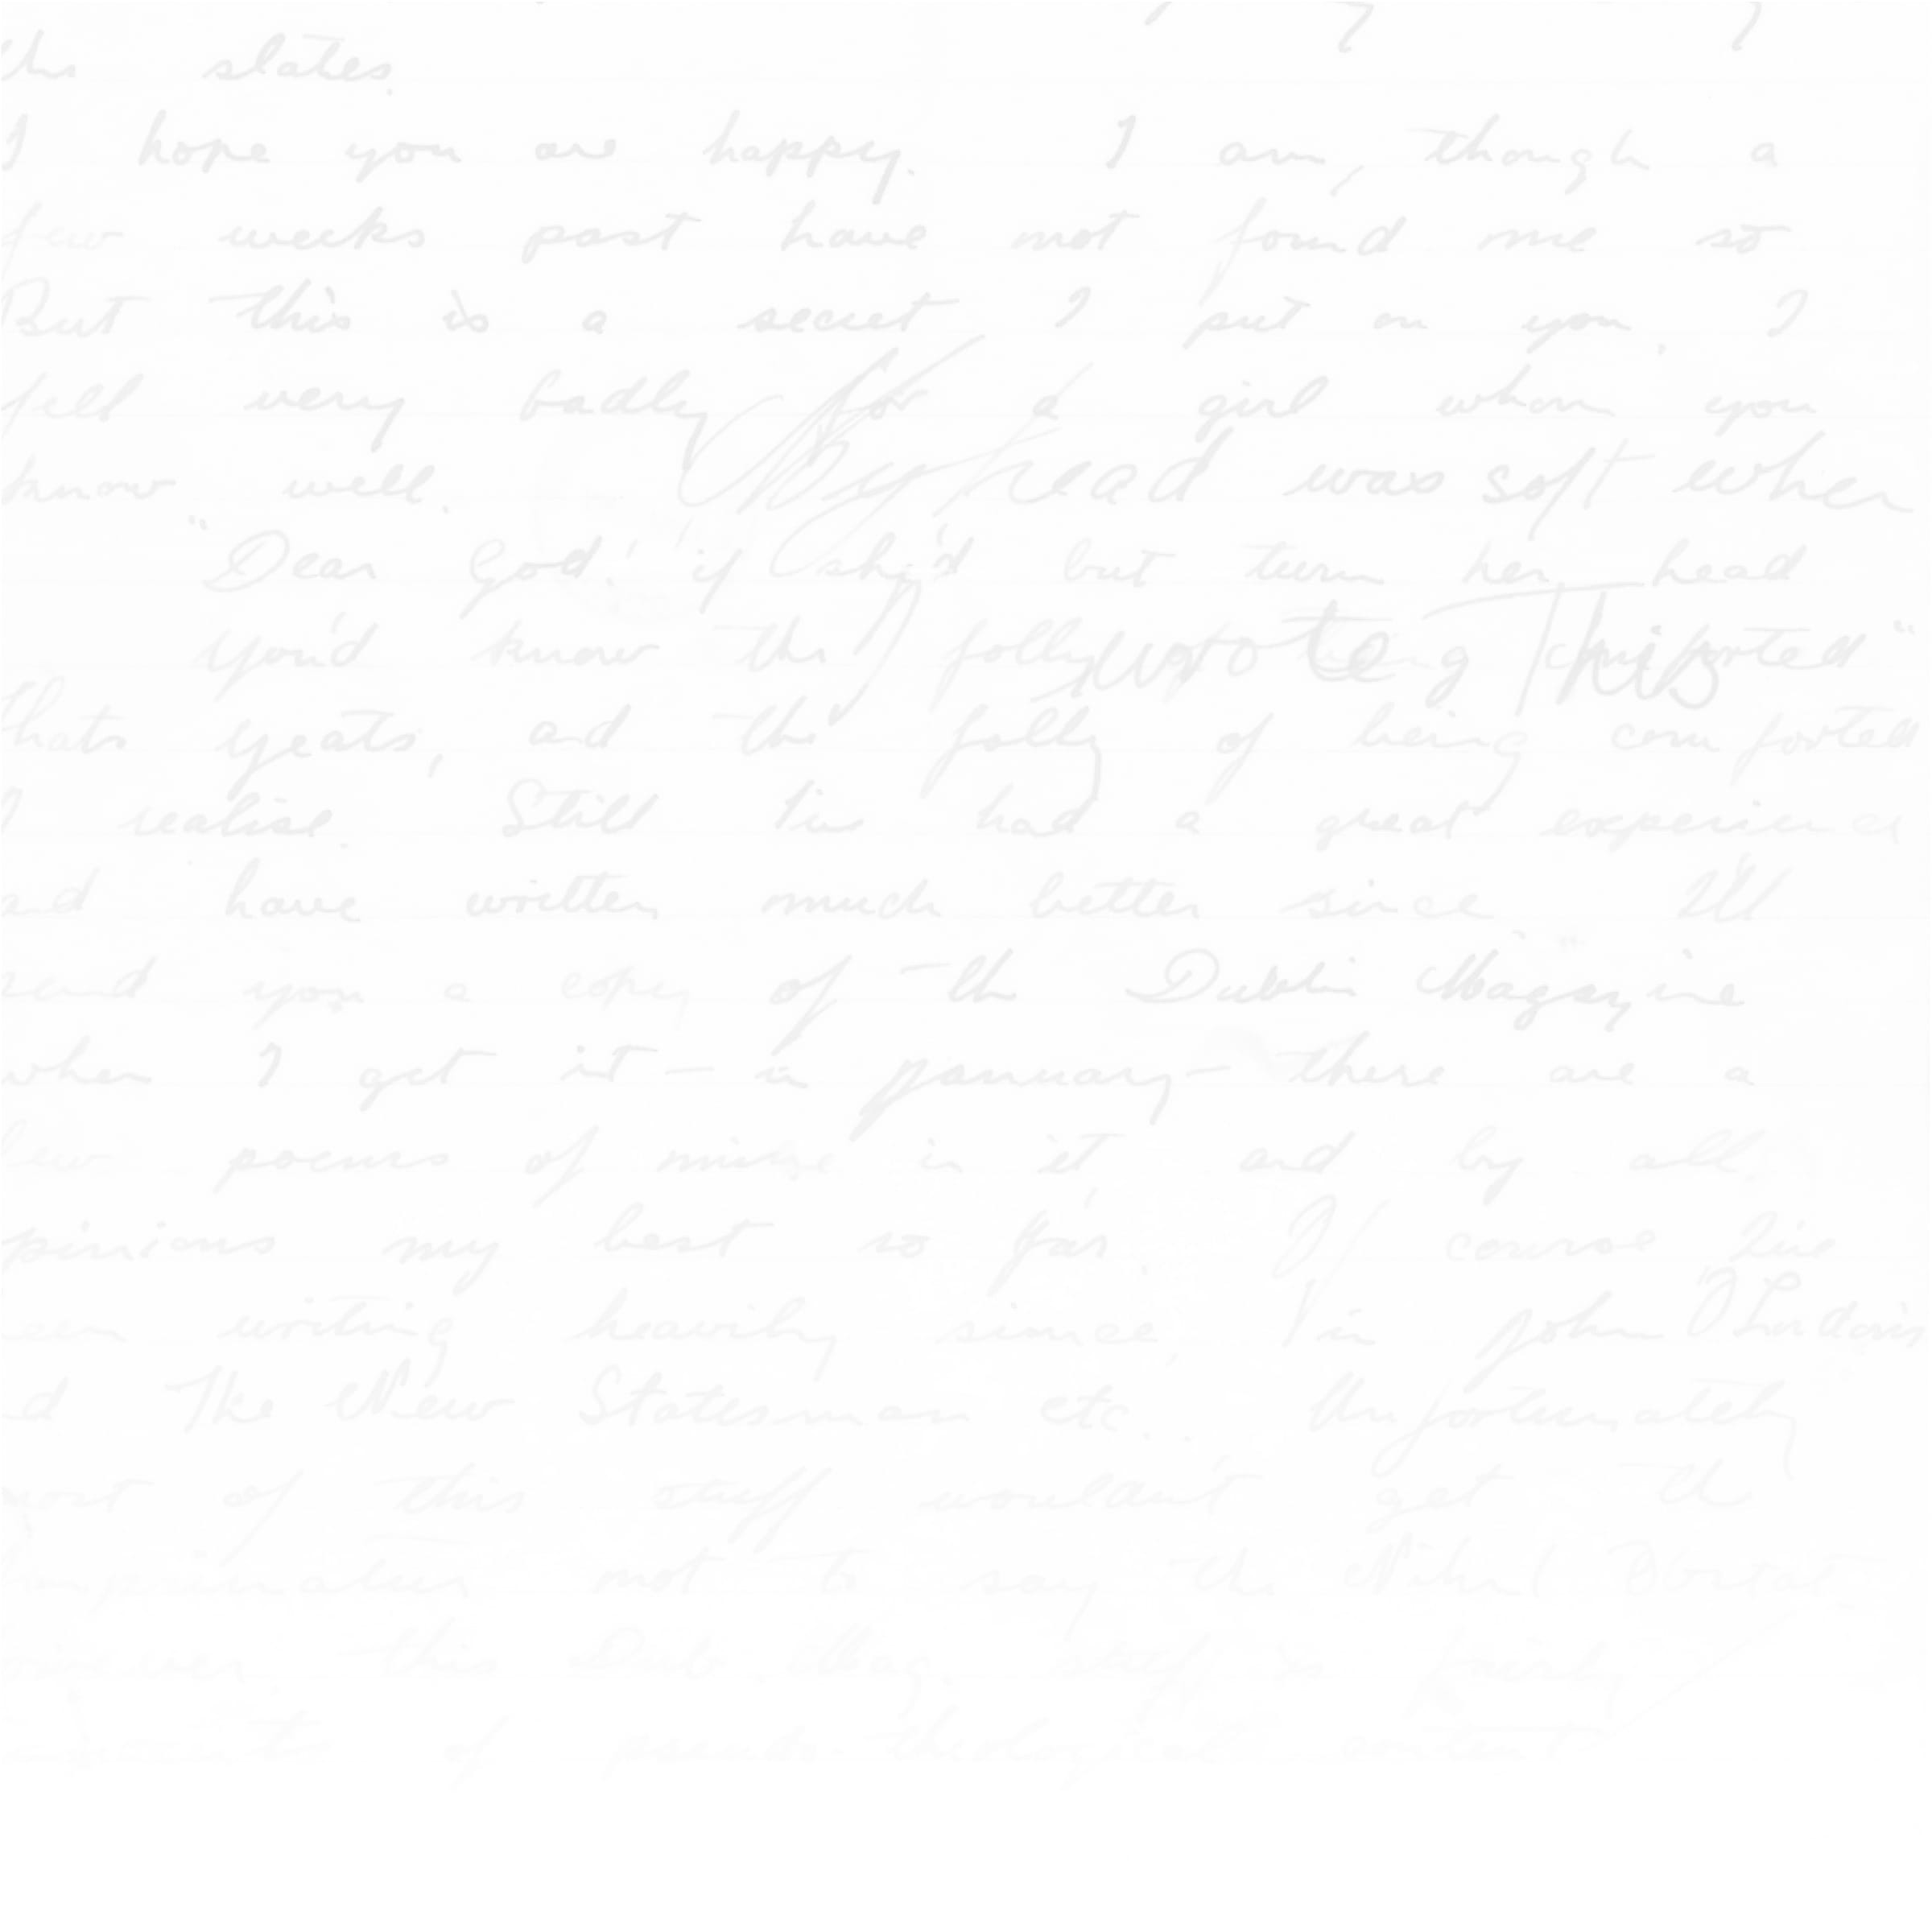 kavanagh-bg-handwritten_web-1669994495.jpg